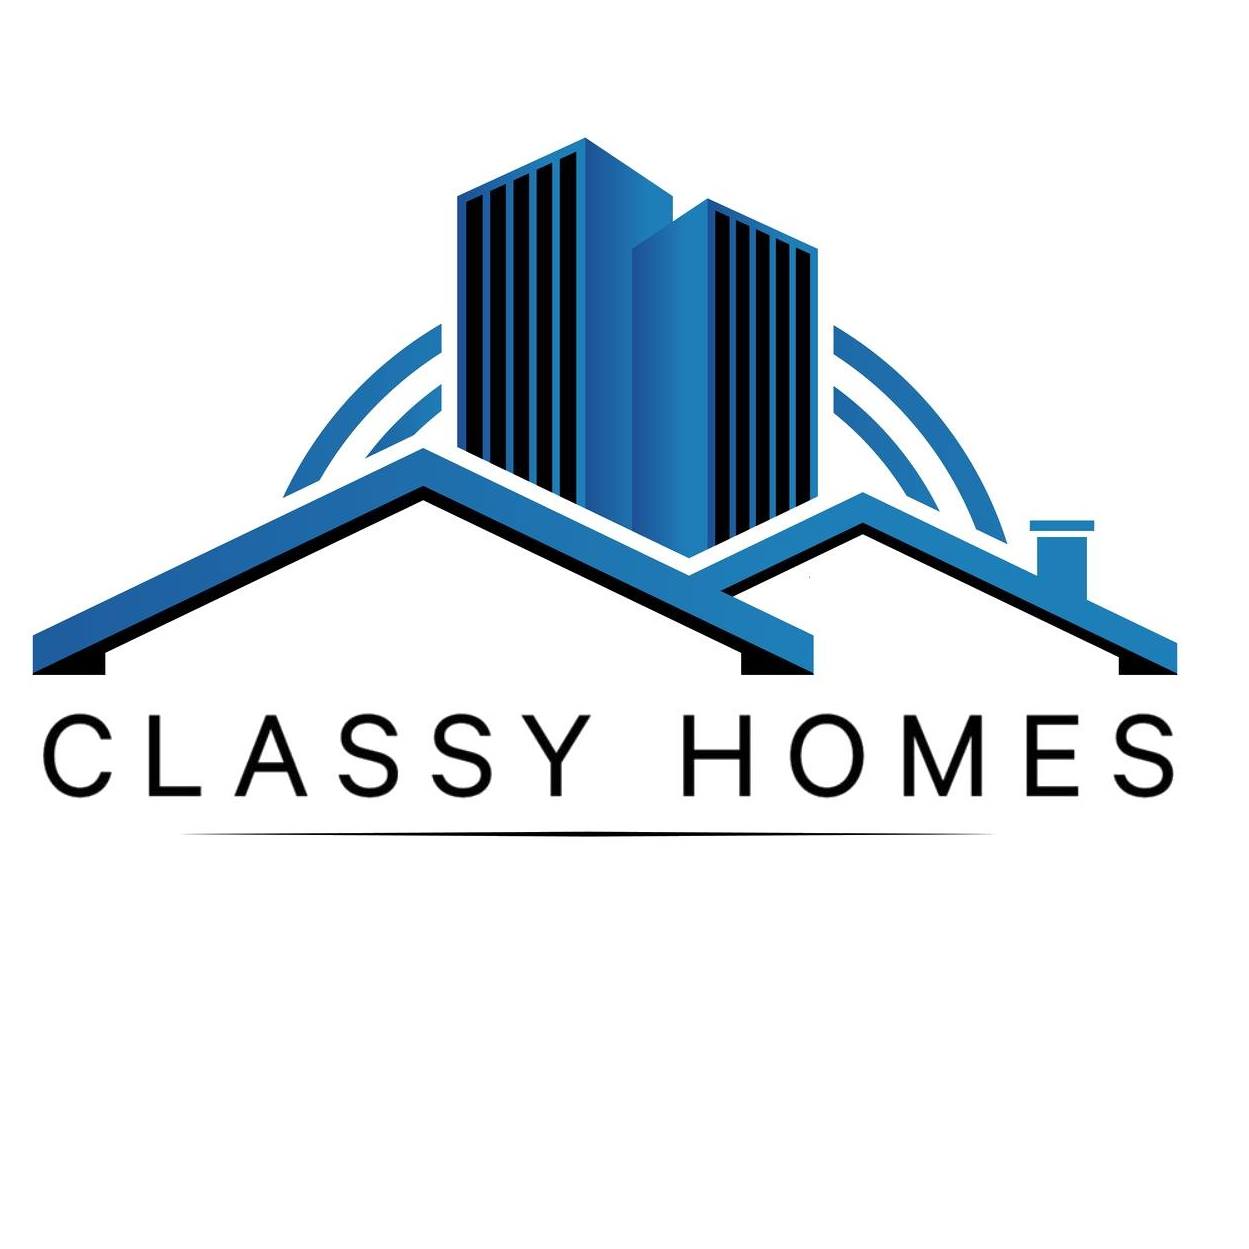 Classy homes Foundation